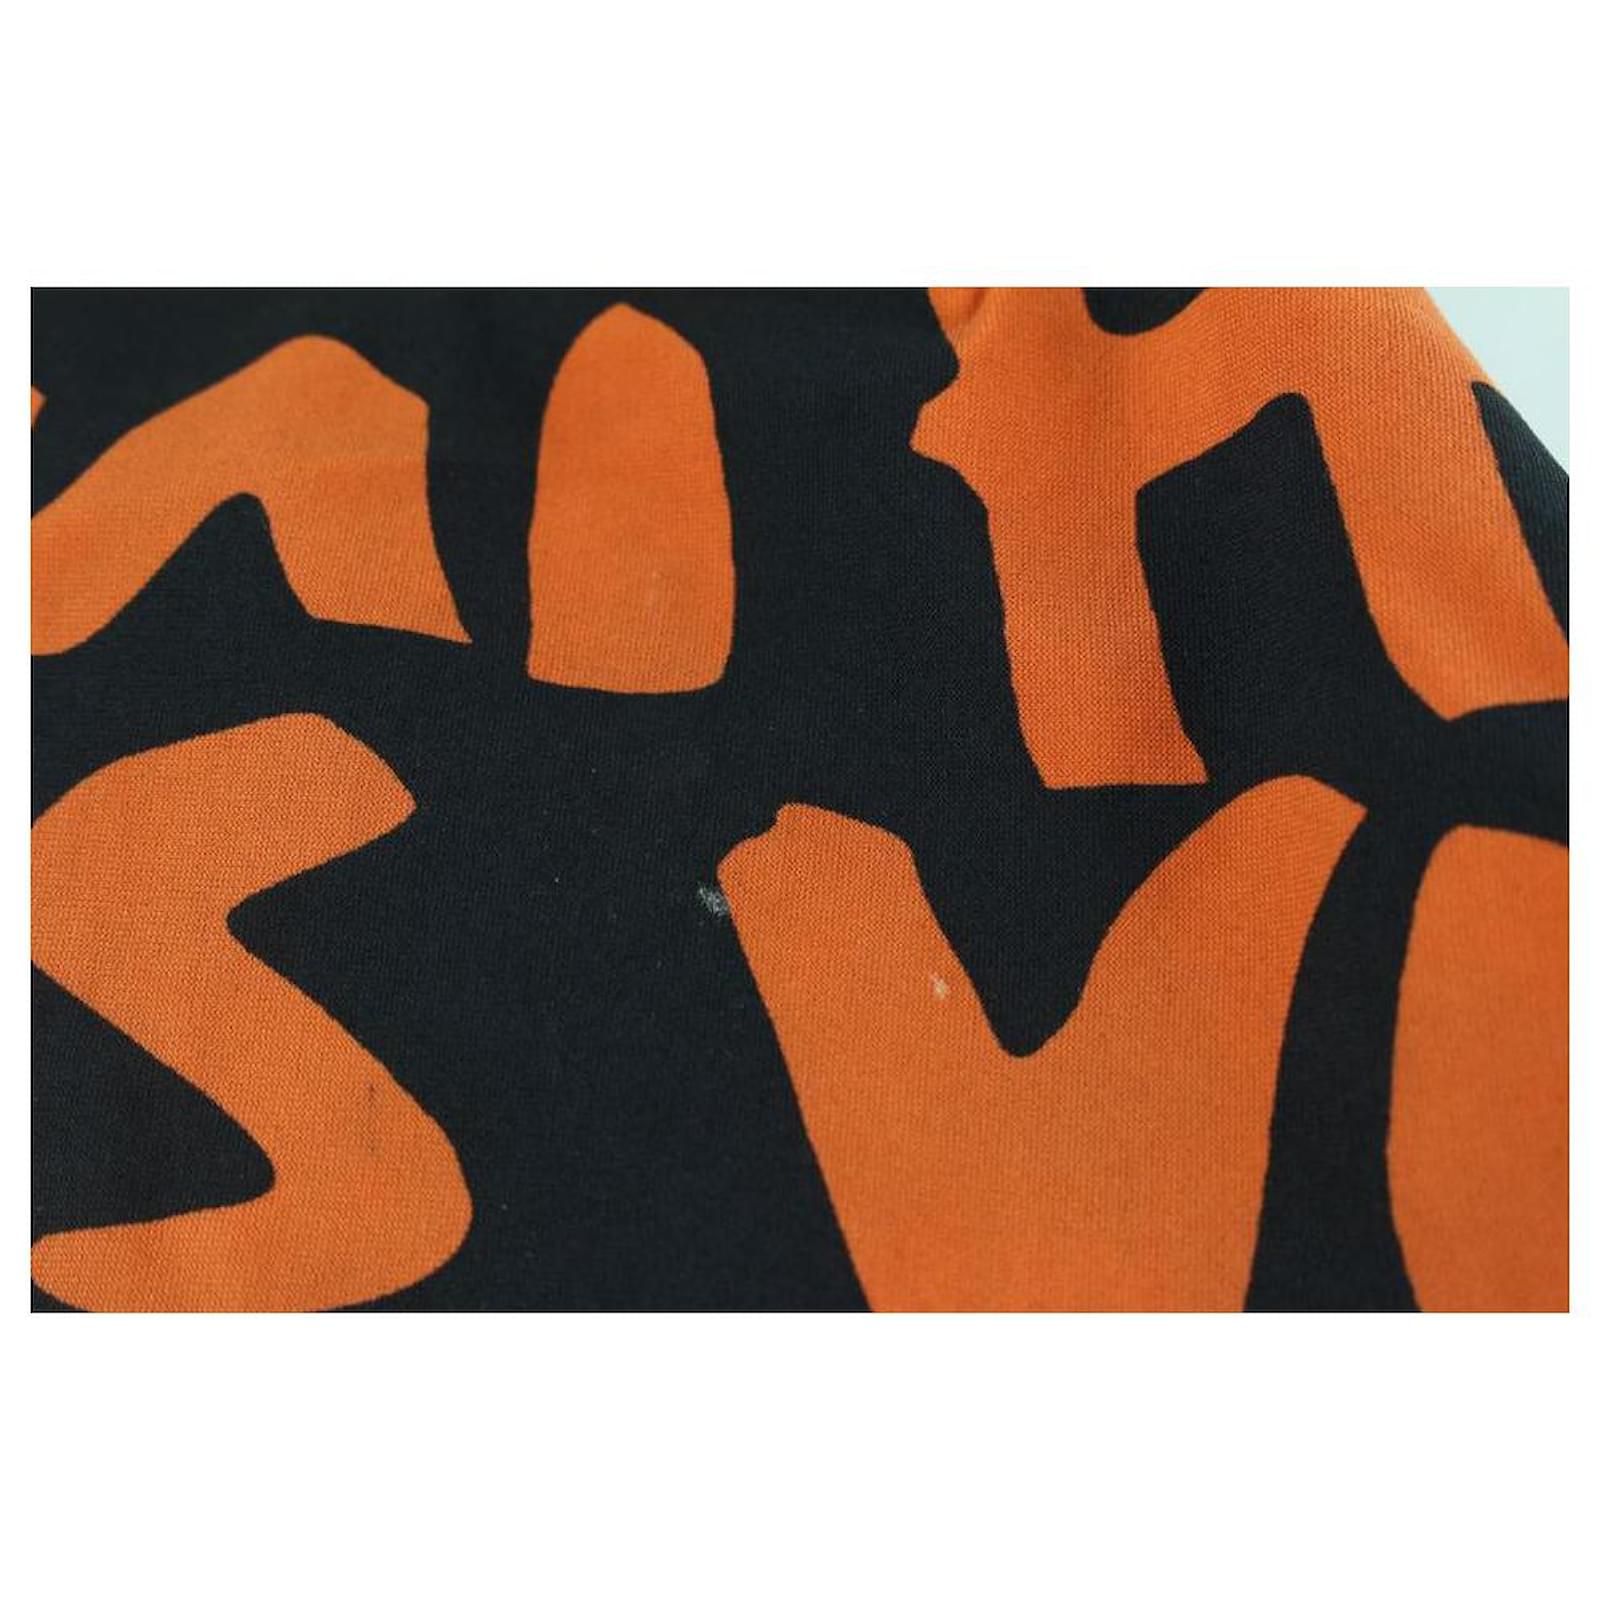 Louis Vuitton Women's Size 40 Stephen Sprouse Orange Graffiti